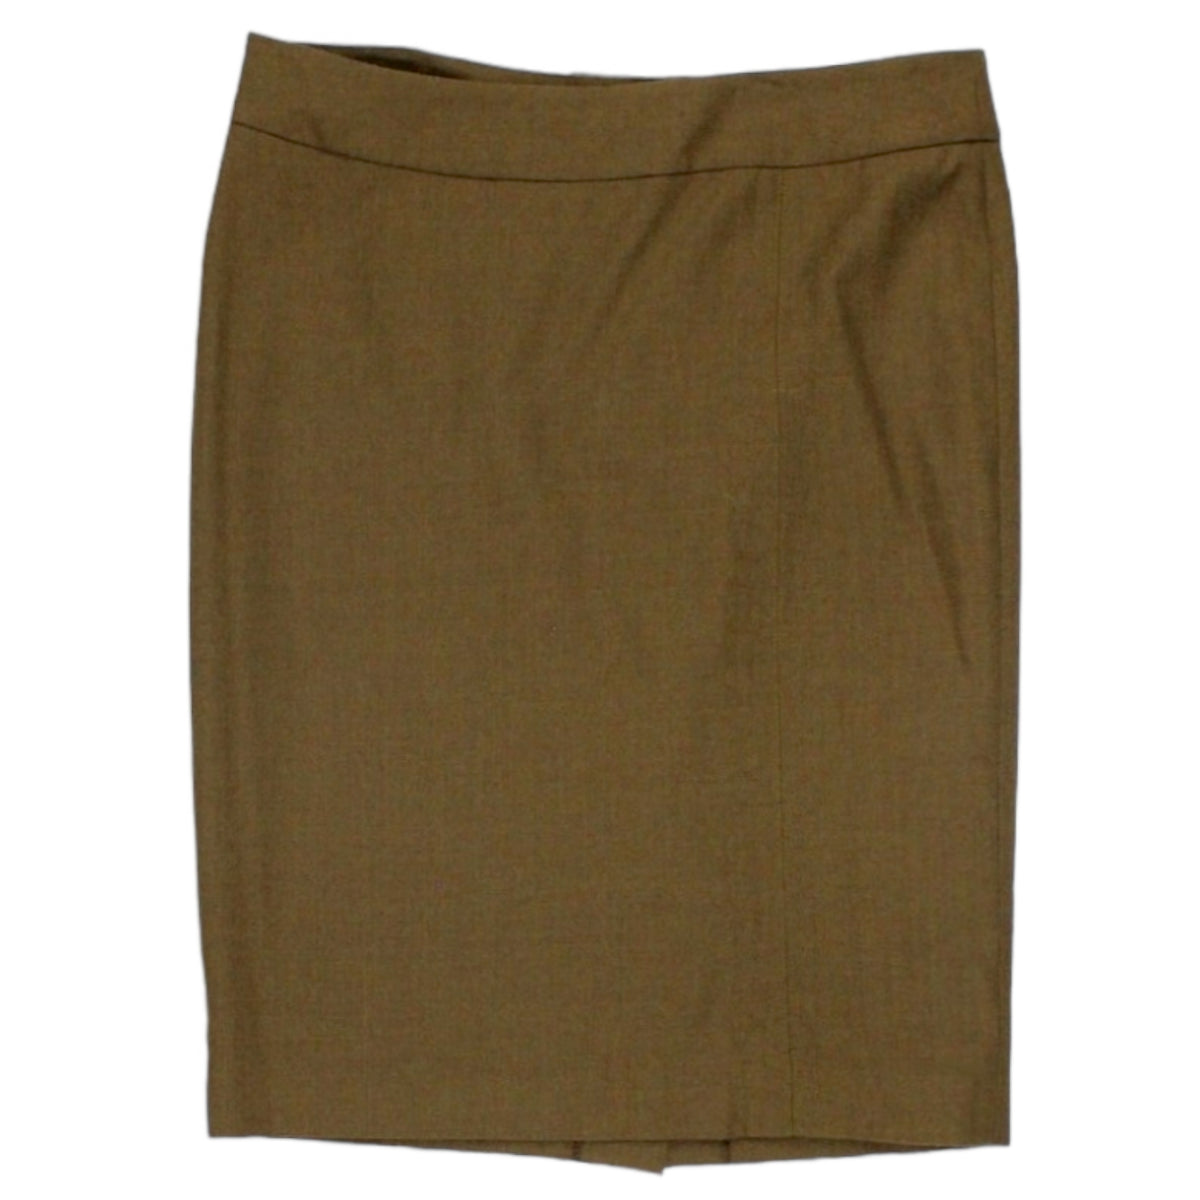 Orla Kiely Ochre Knee Length Pencil Skirt